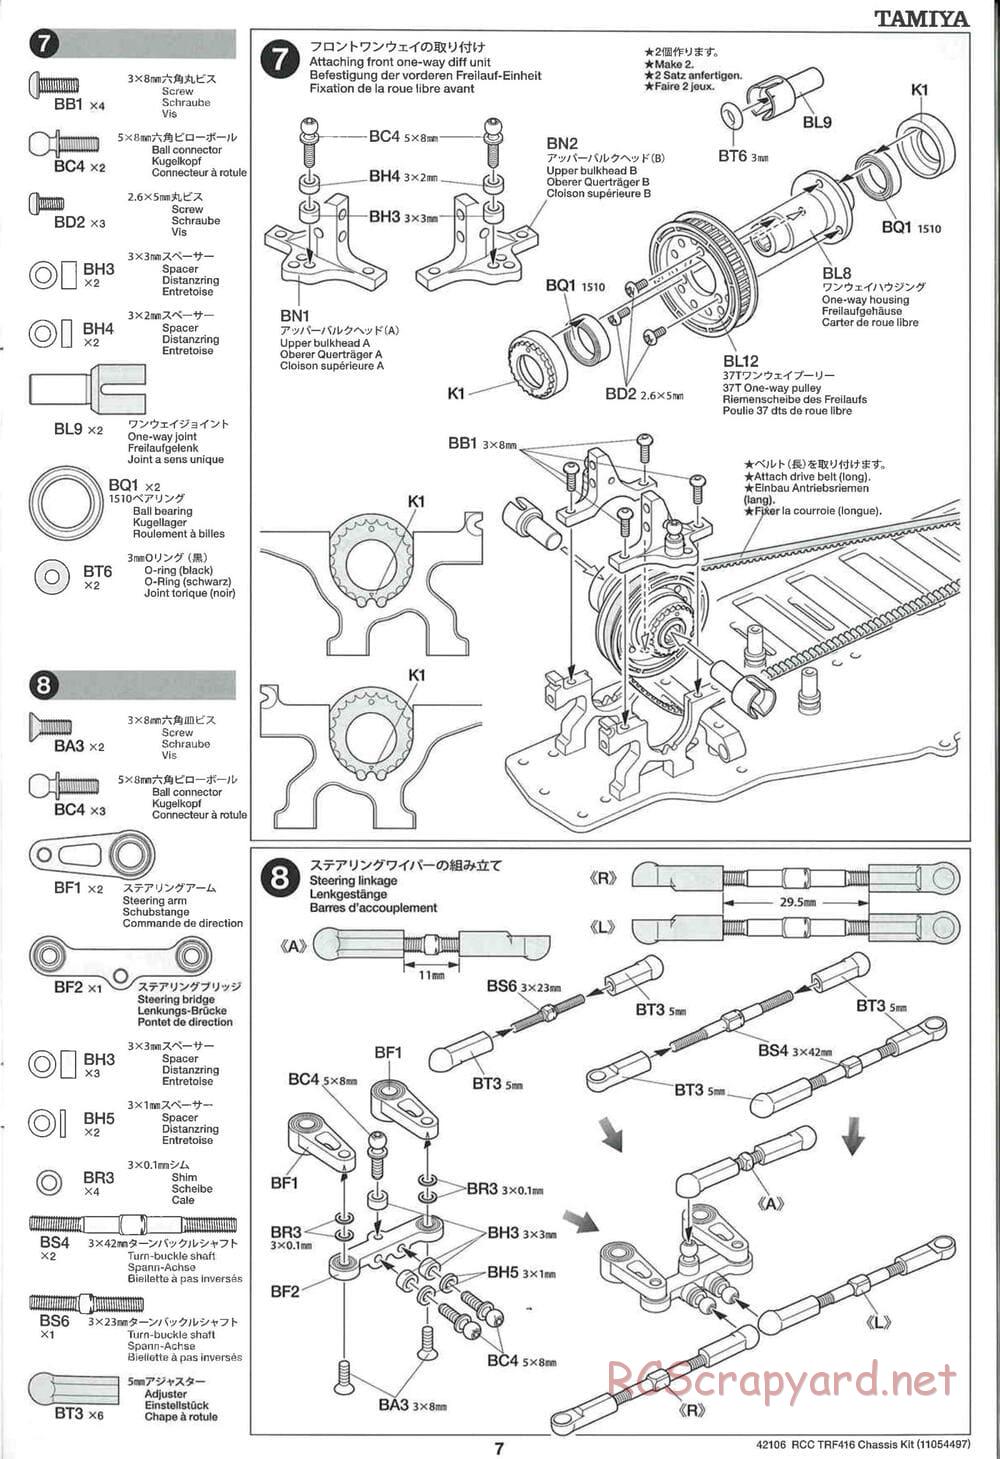 Tamiya - TRF416 Chassis - Manual - Page 7